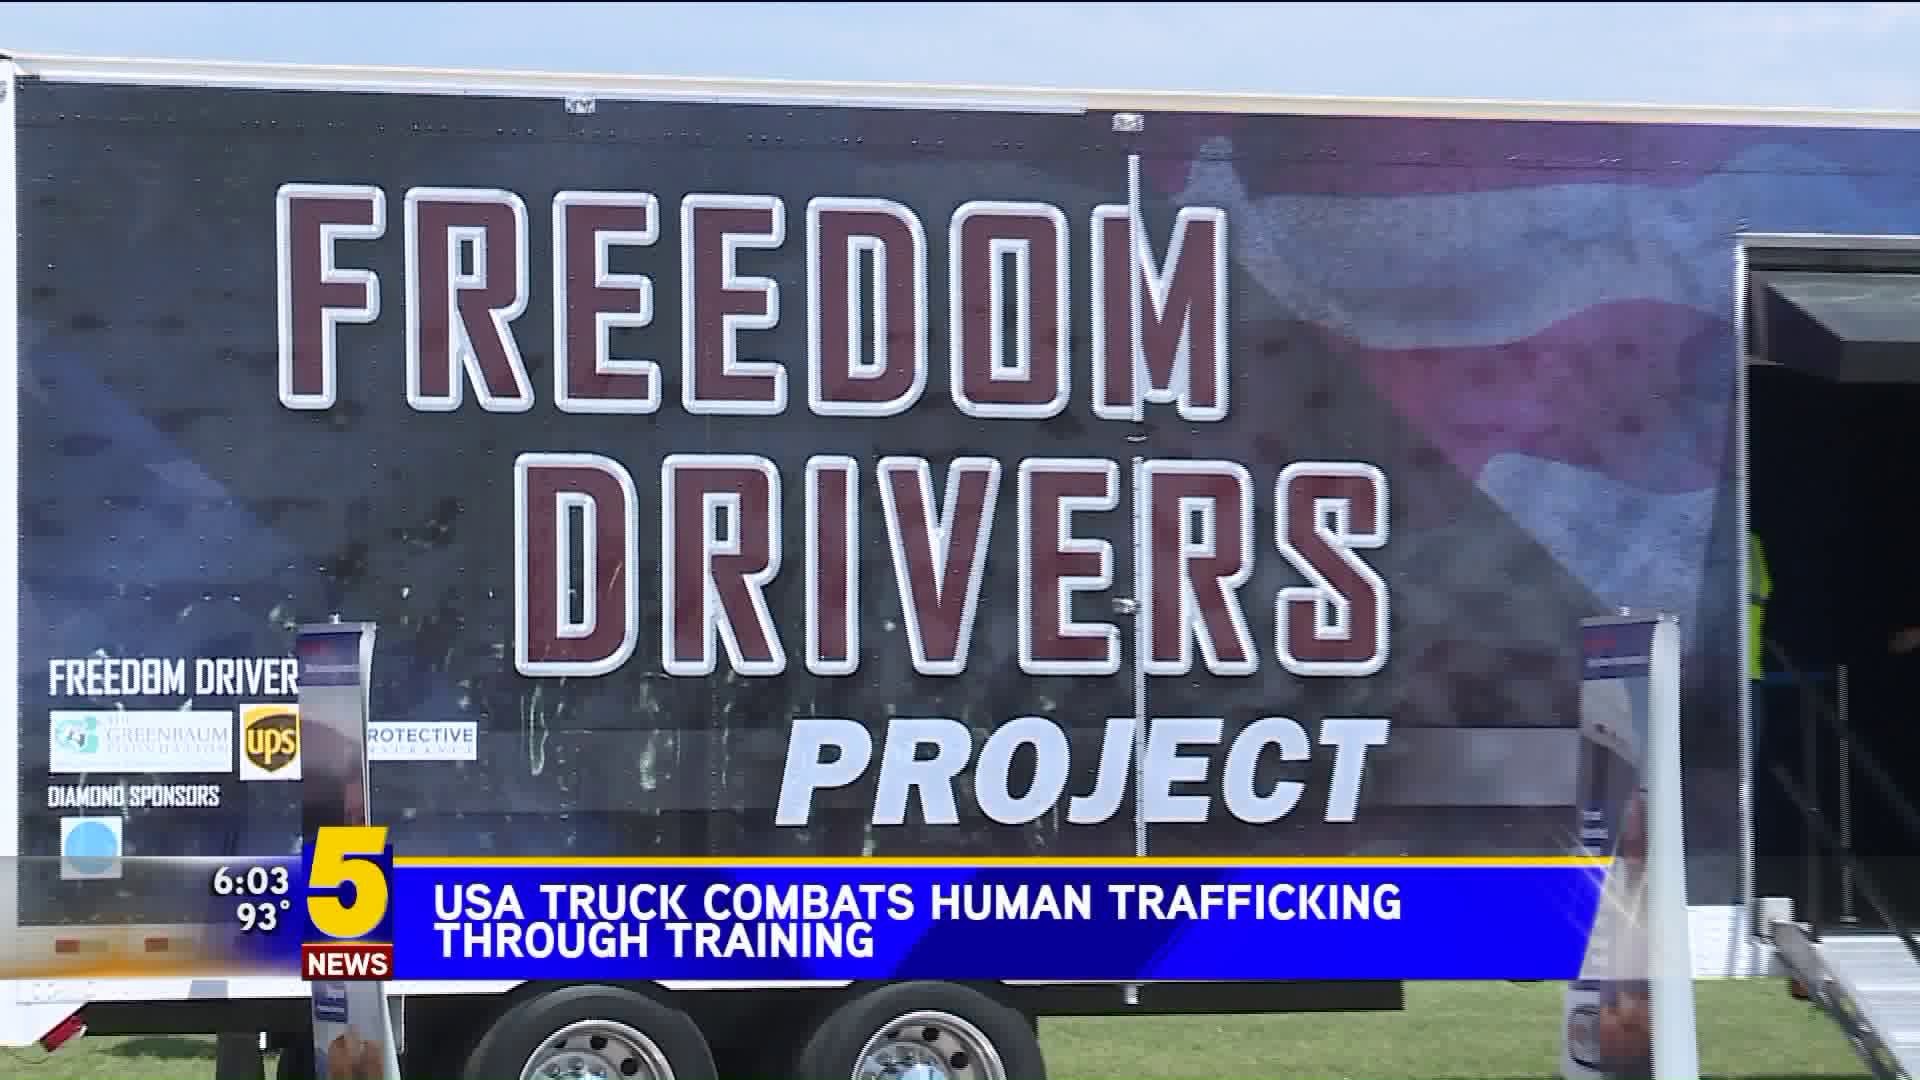 USA truck Comats Human Trafficking Through Training